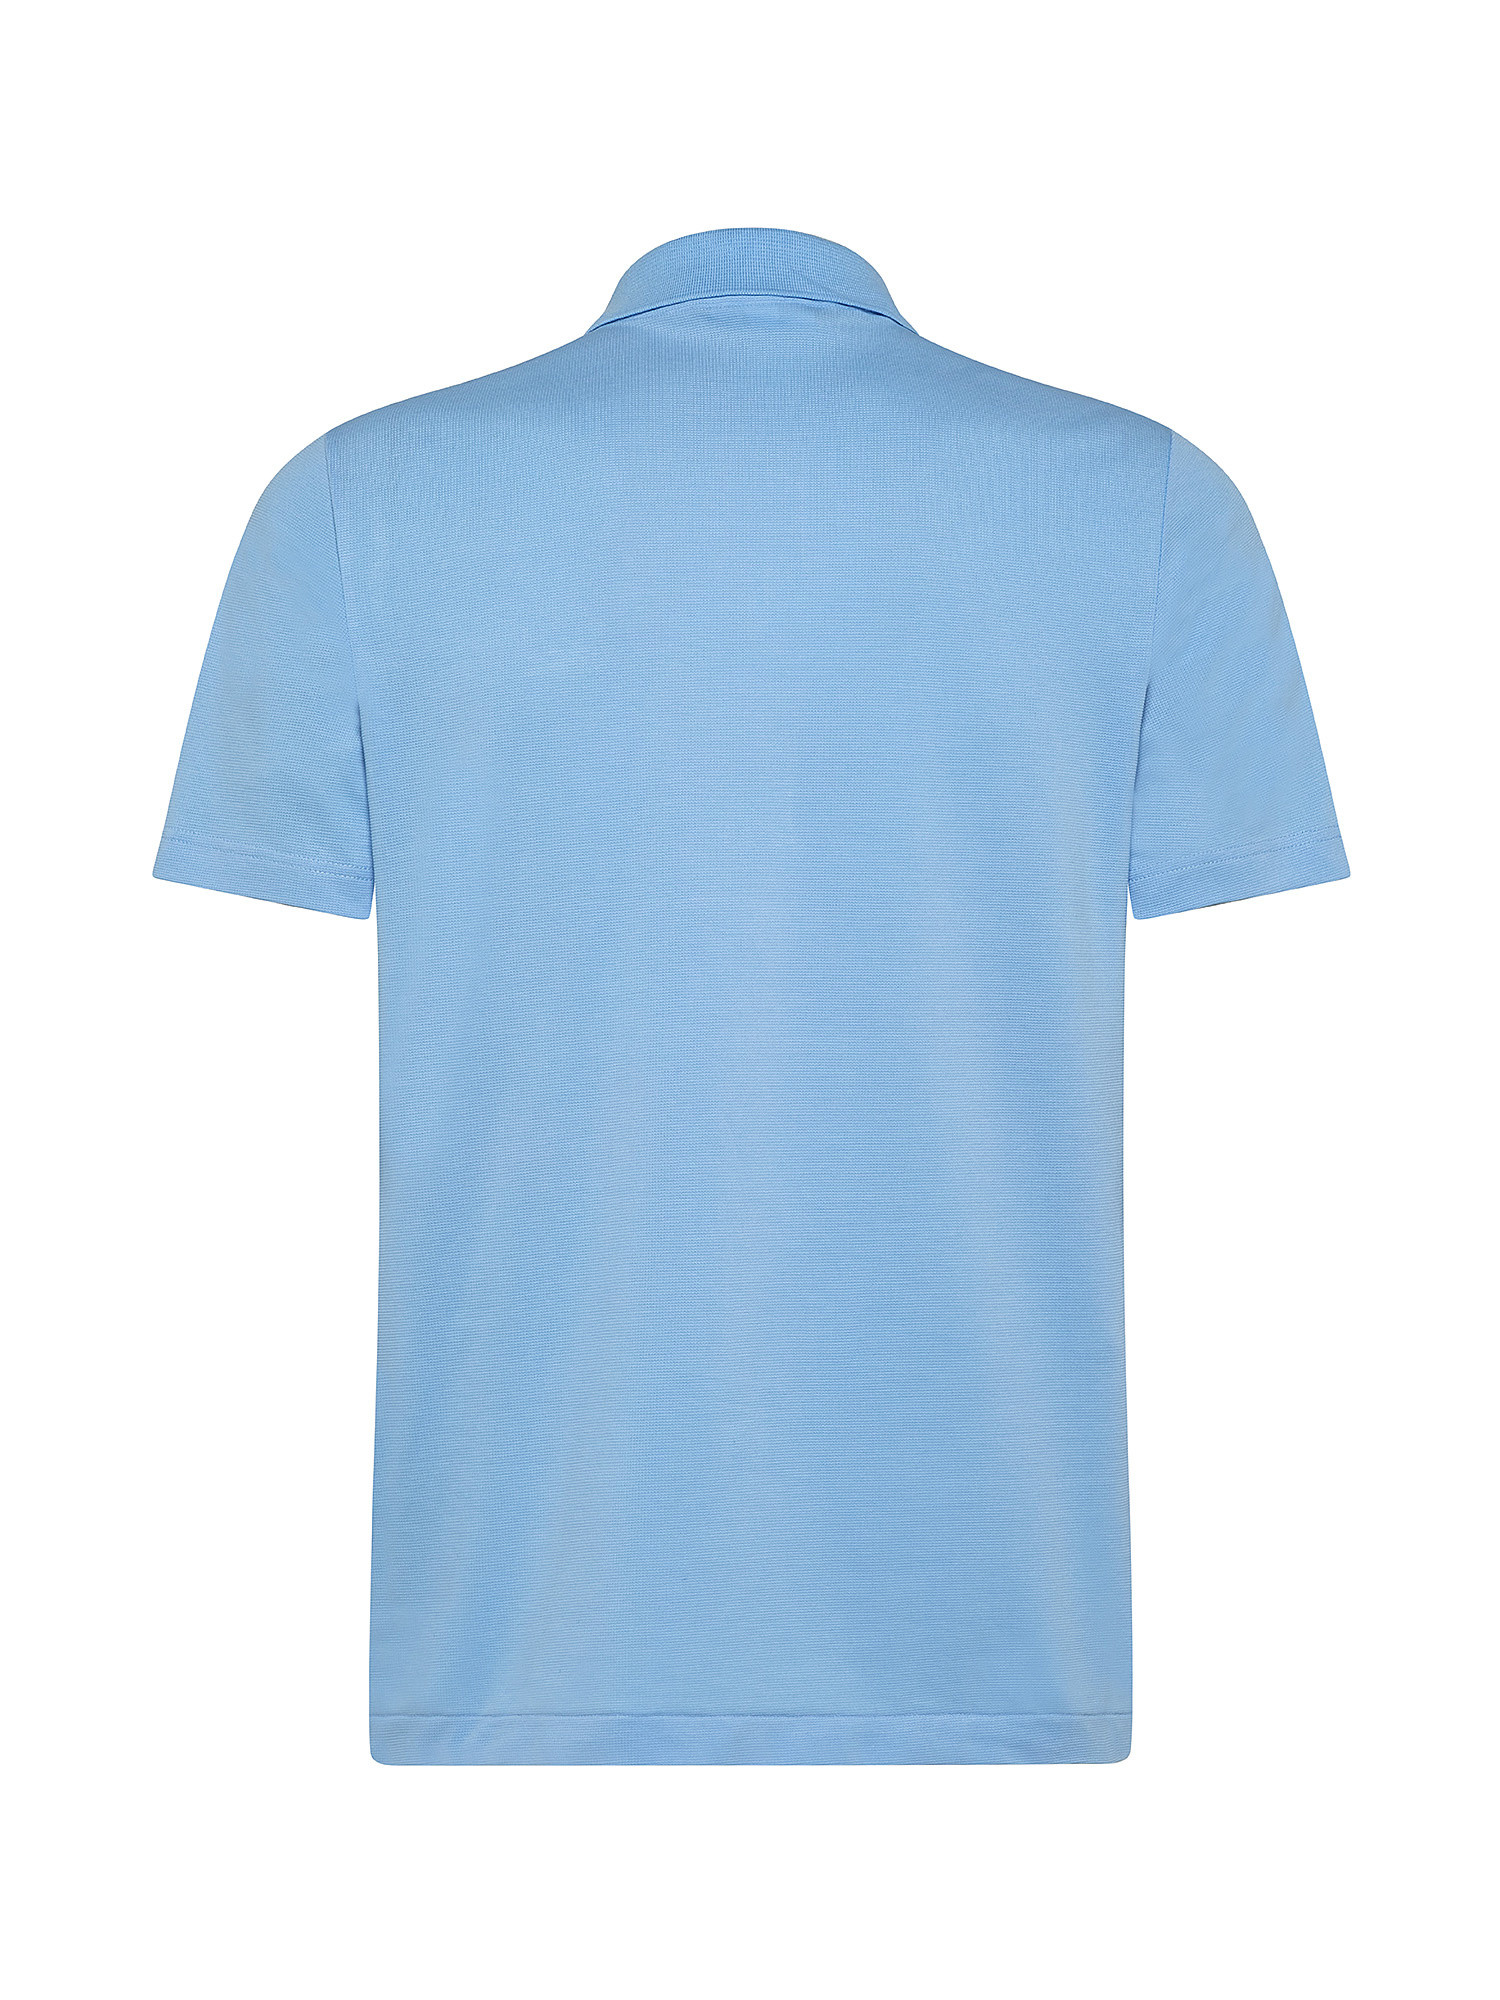 Polo shirt, Light Blue, large image number 1